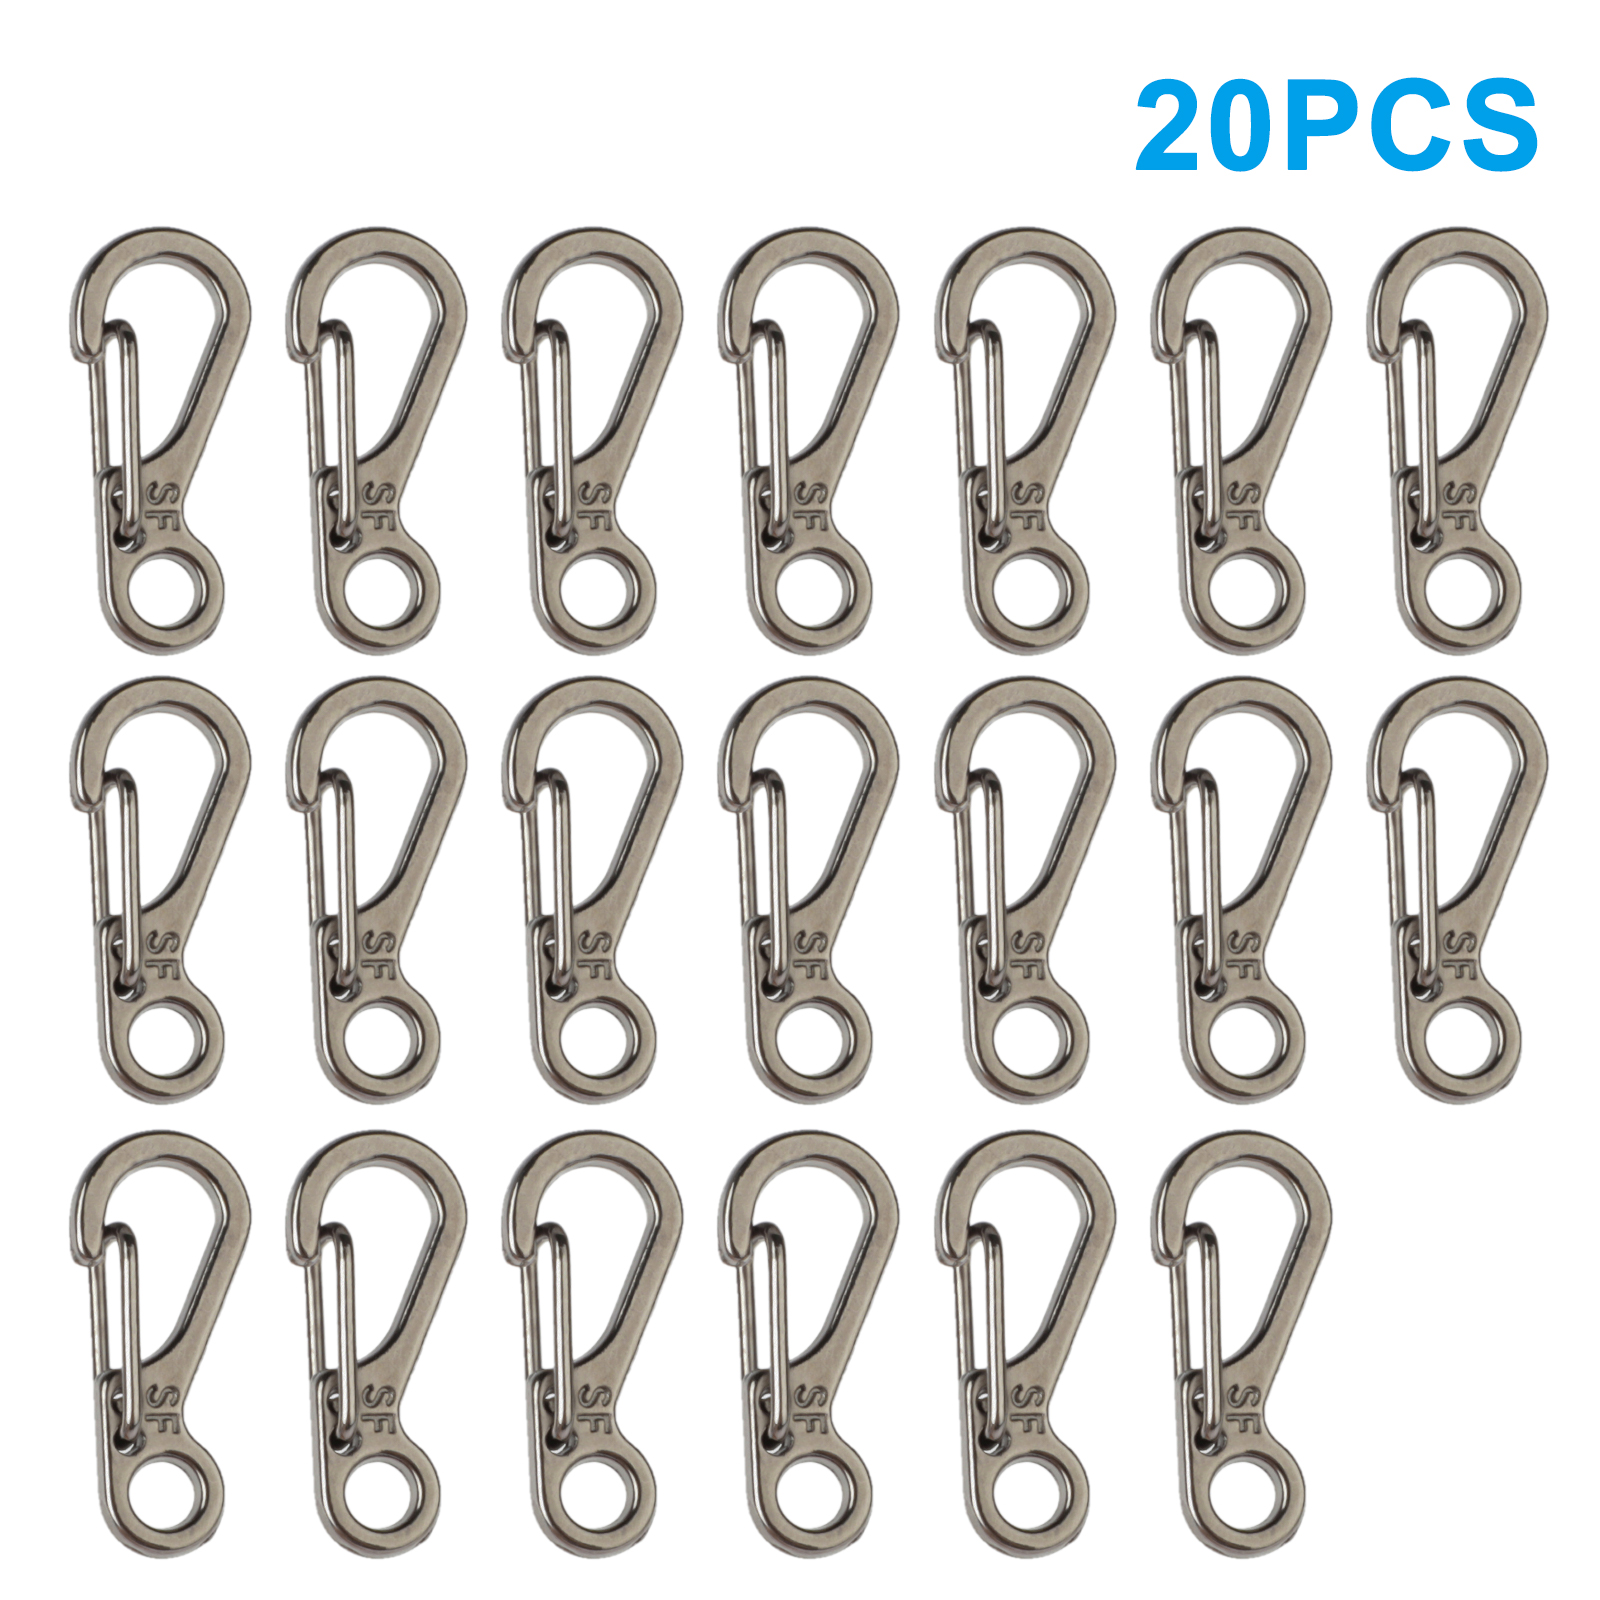 Details about   10PCS Mini Heavy Duty Aluminum Carabiner Key Chain Snap Hooks Clip Camping 